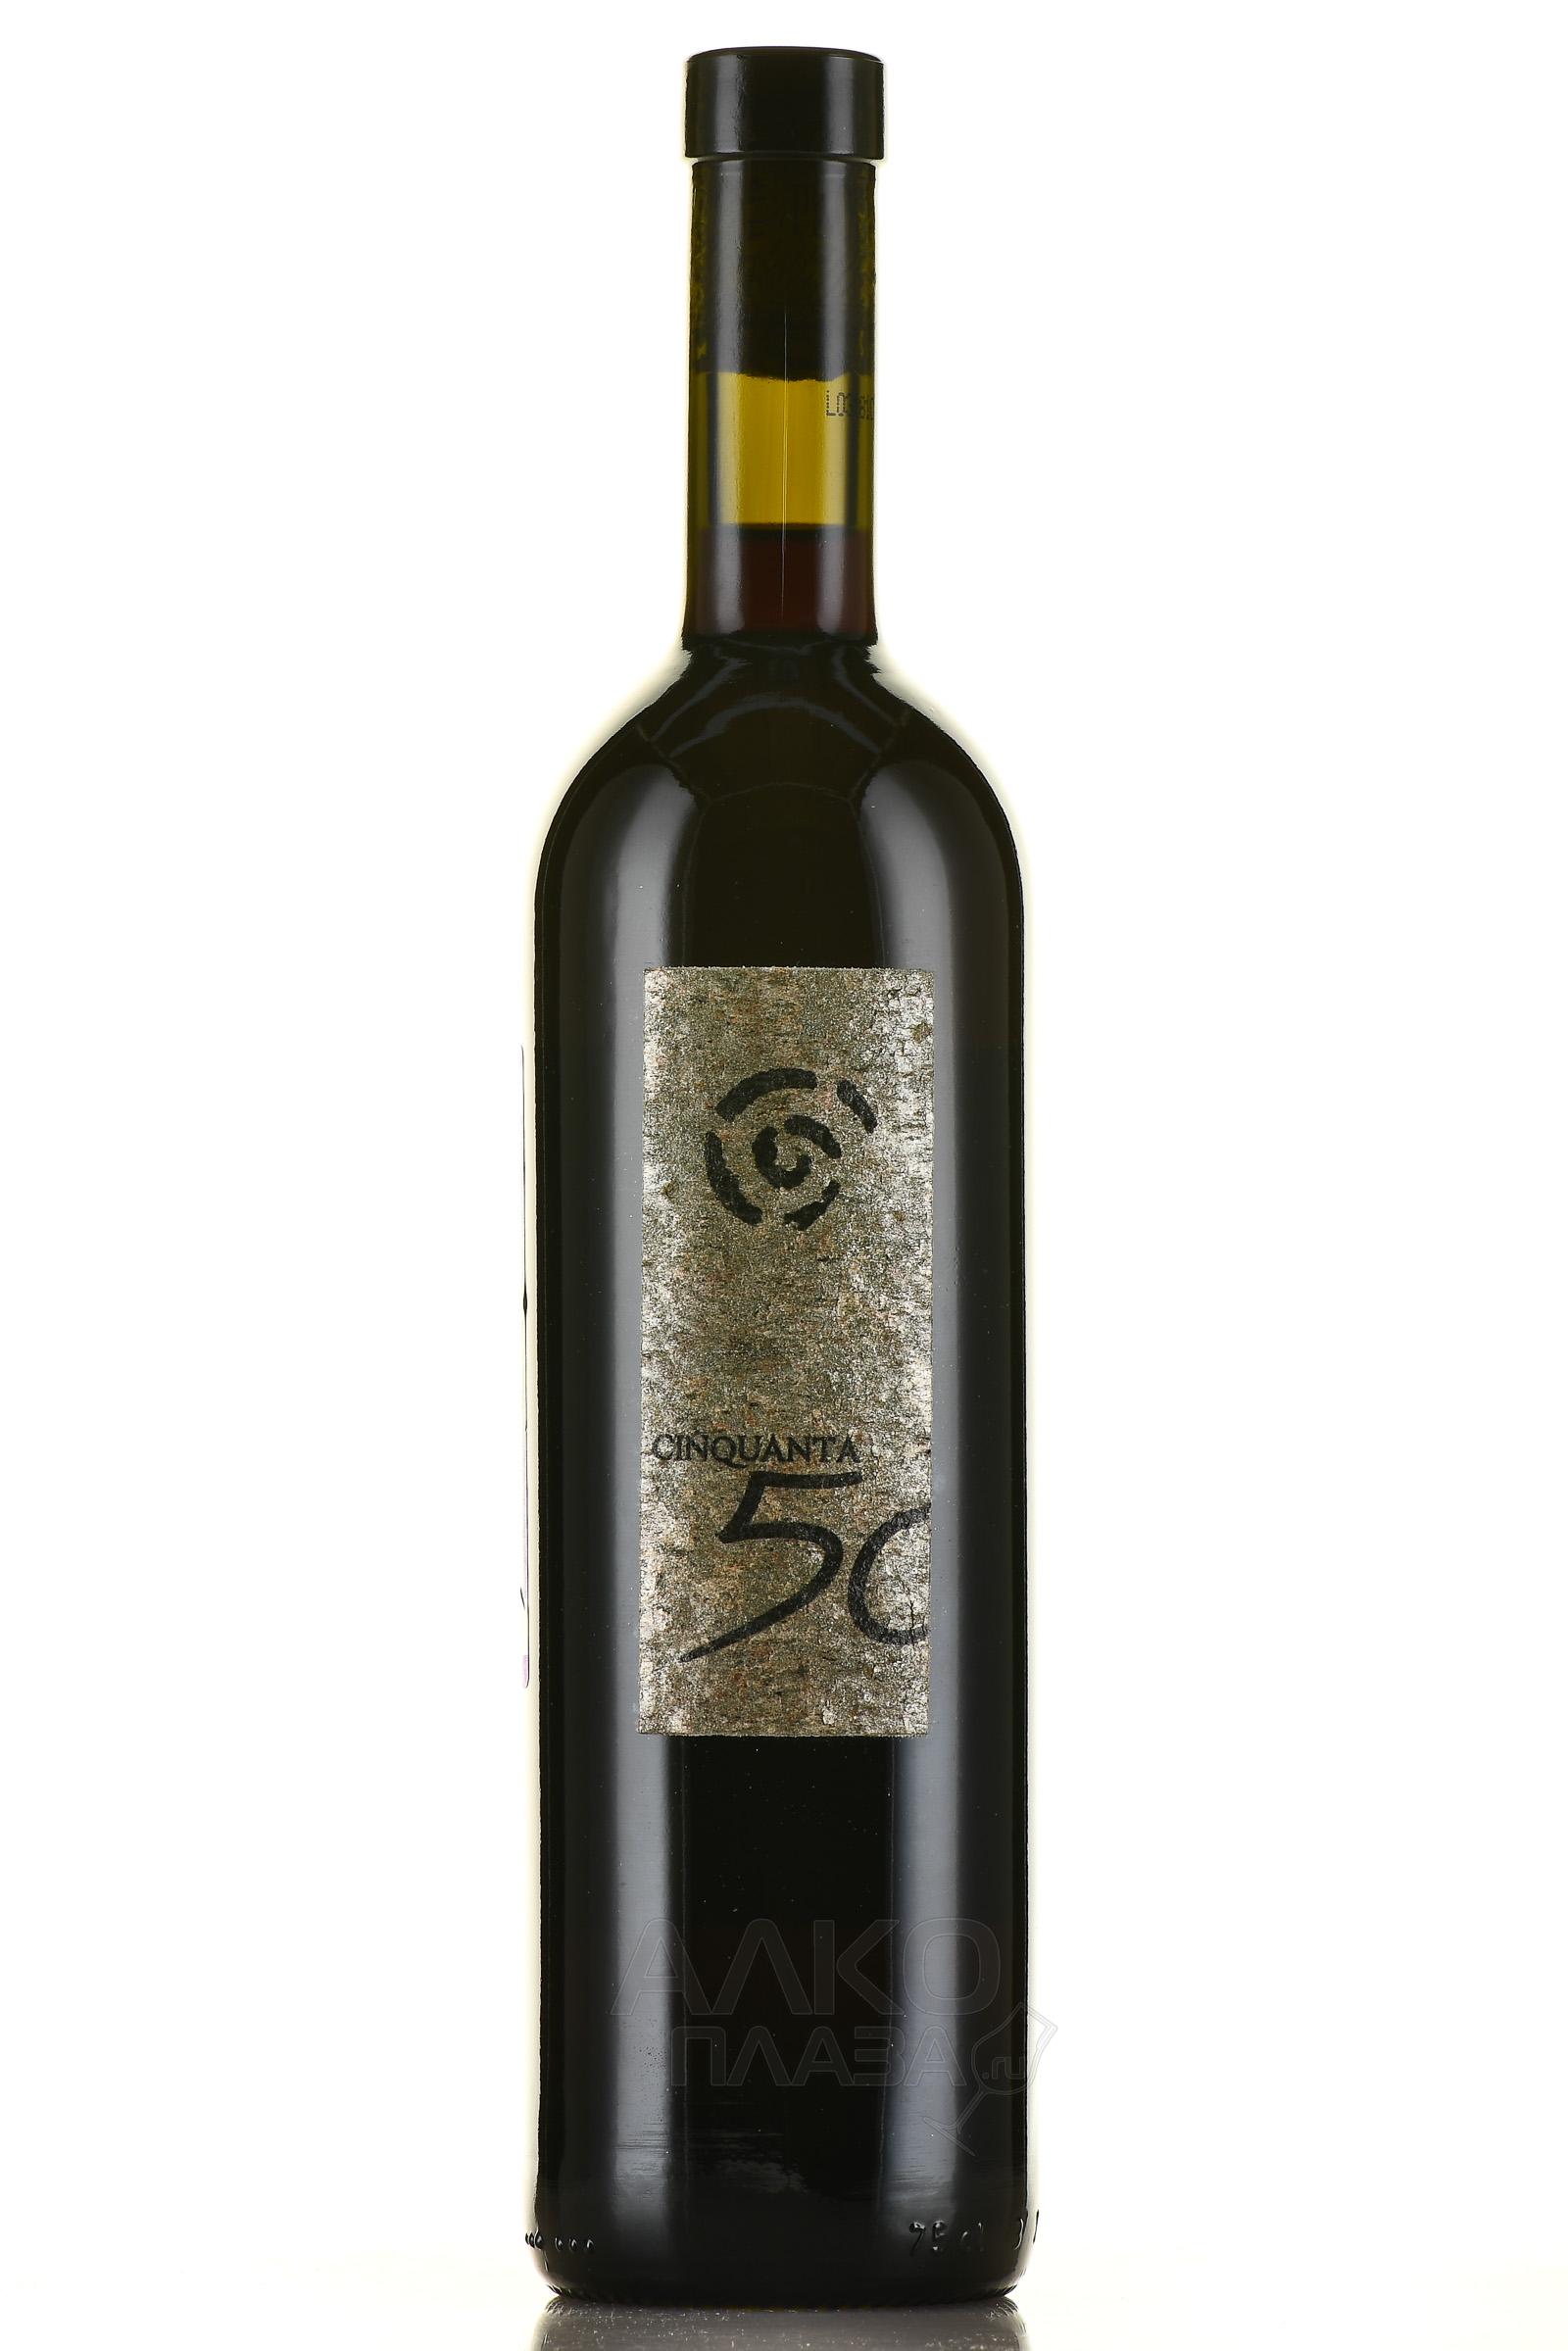 Plozza Cinquanta / 50 IGT - вино Плоцца Чинкуанта / 50 0.75 л красное сухое